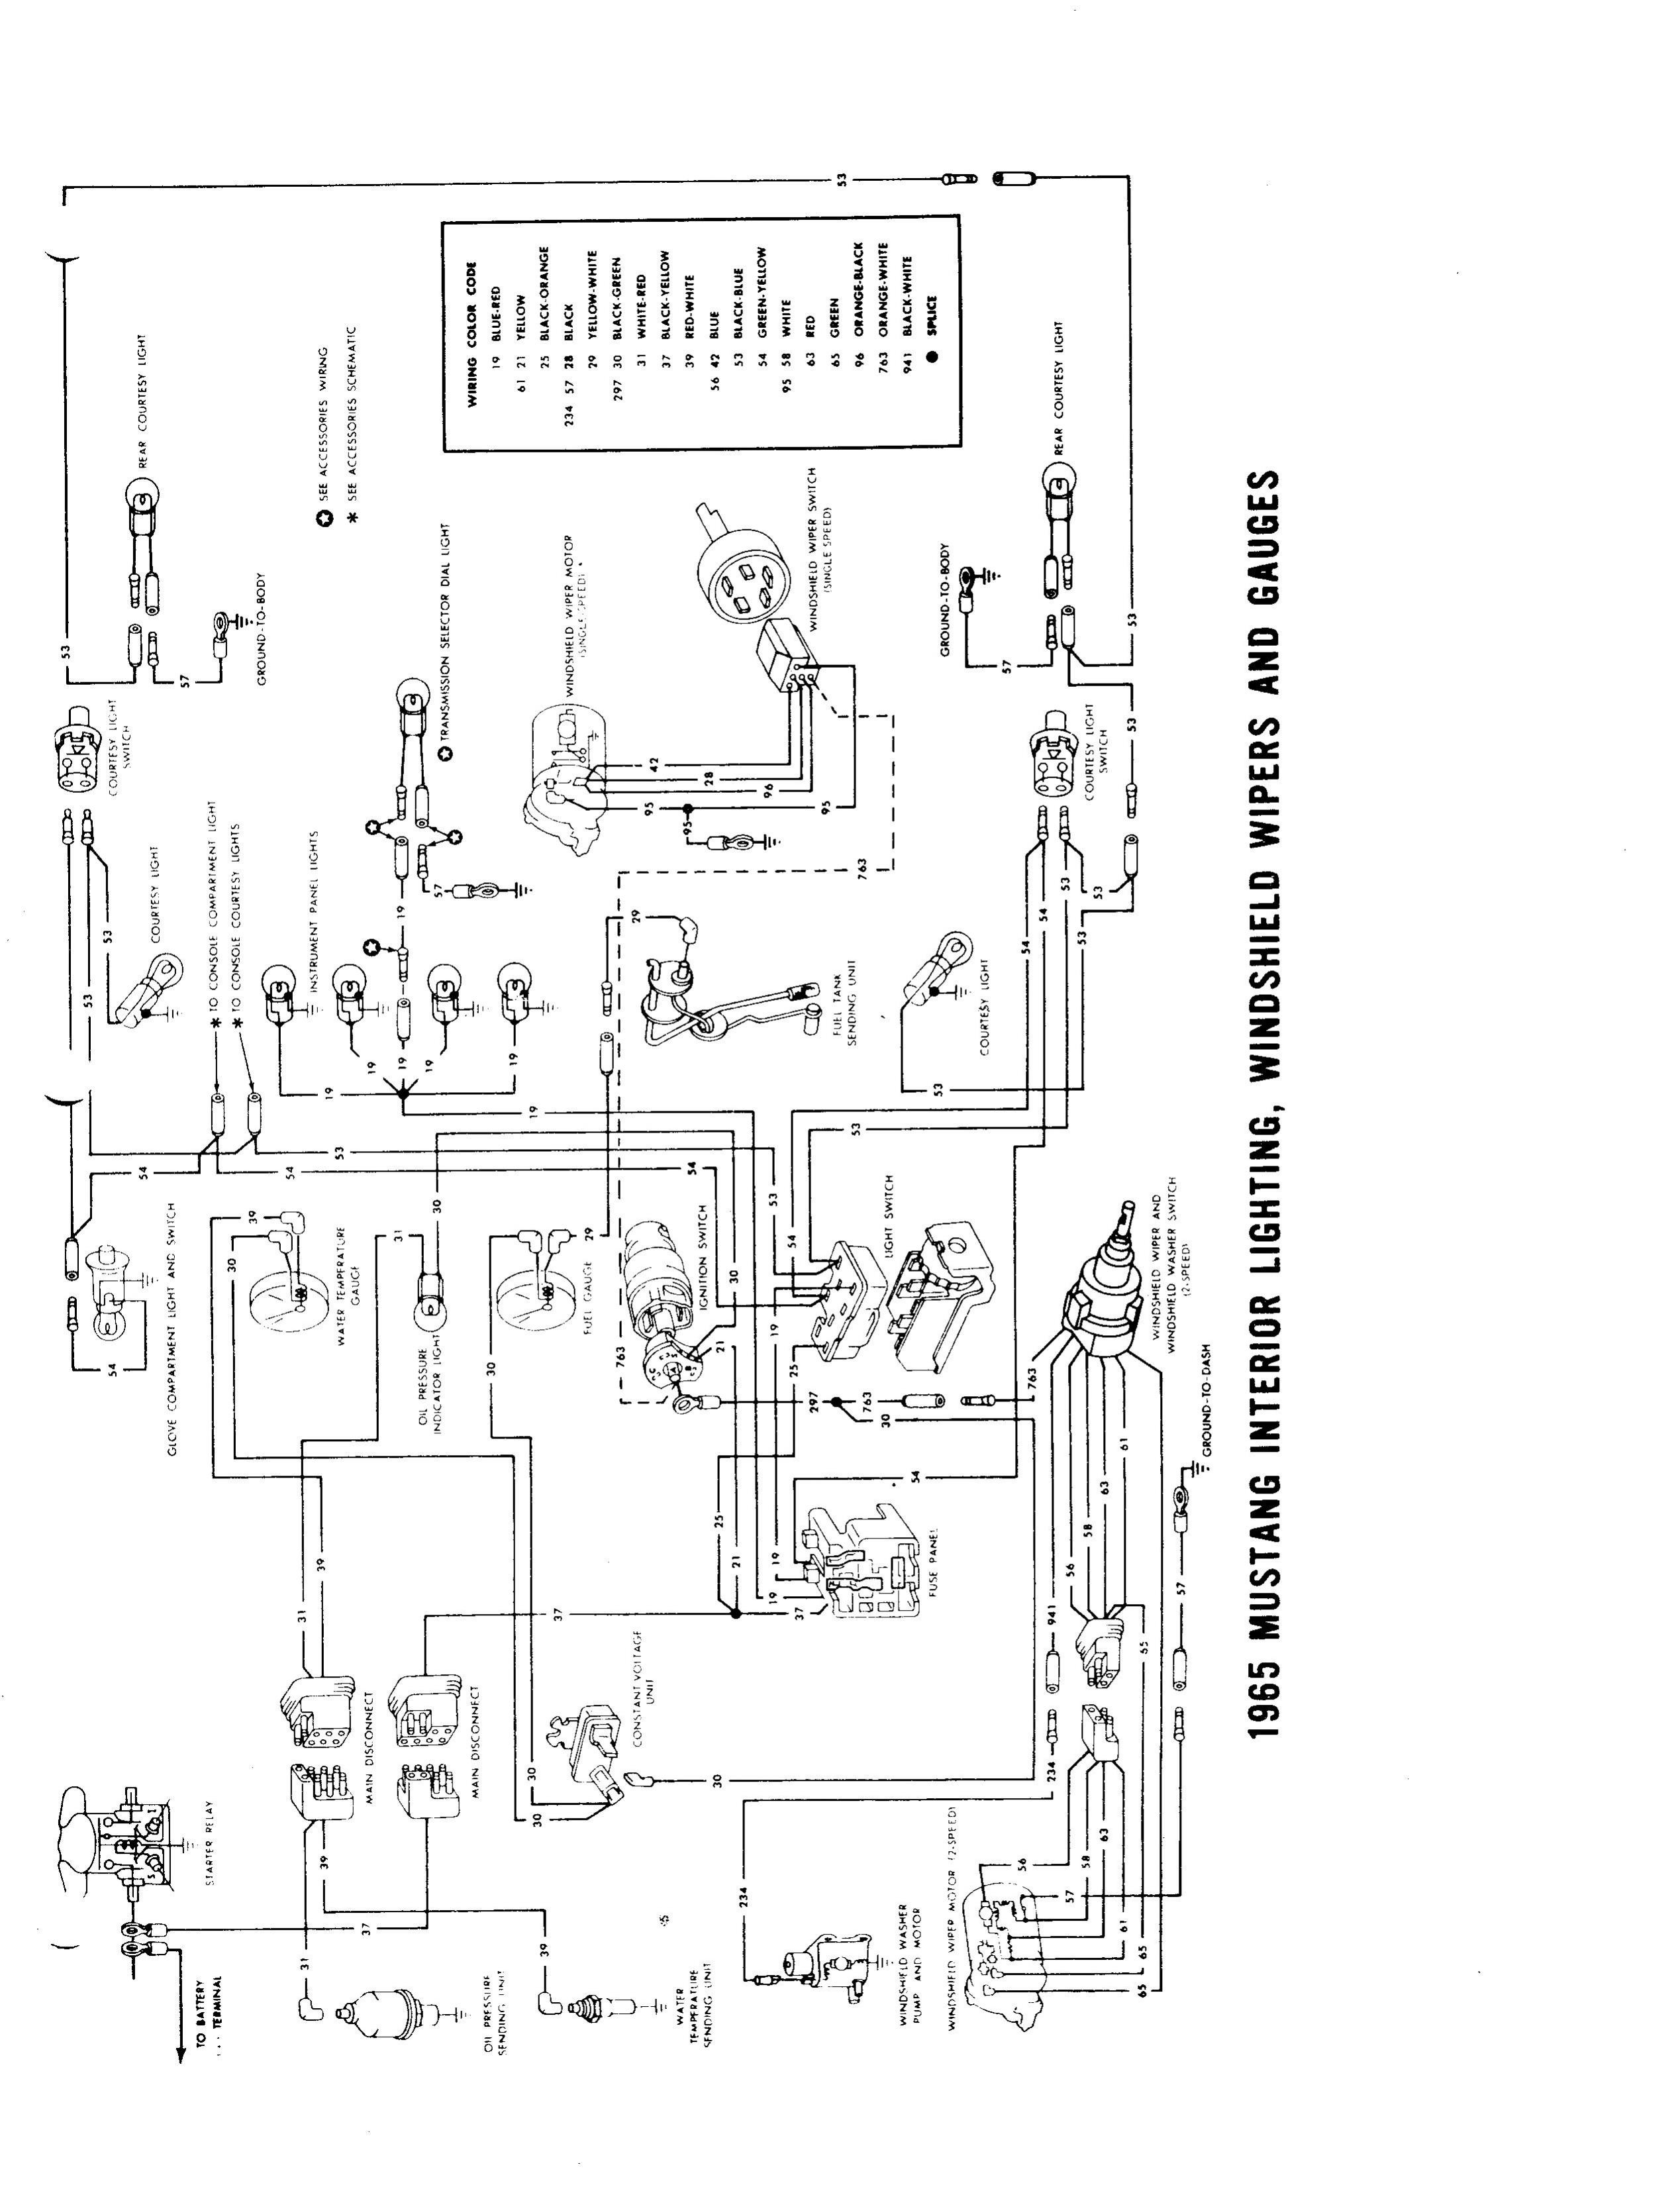 Berkel Wiring Diagram Diagram] Scr Wiring Diagram Full Version Hd Quality Wiring Of Berkel Wiring Diagram